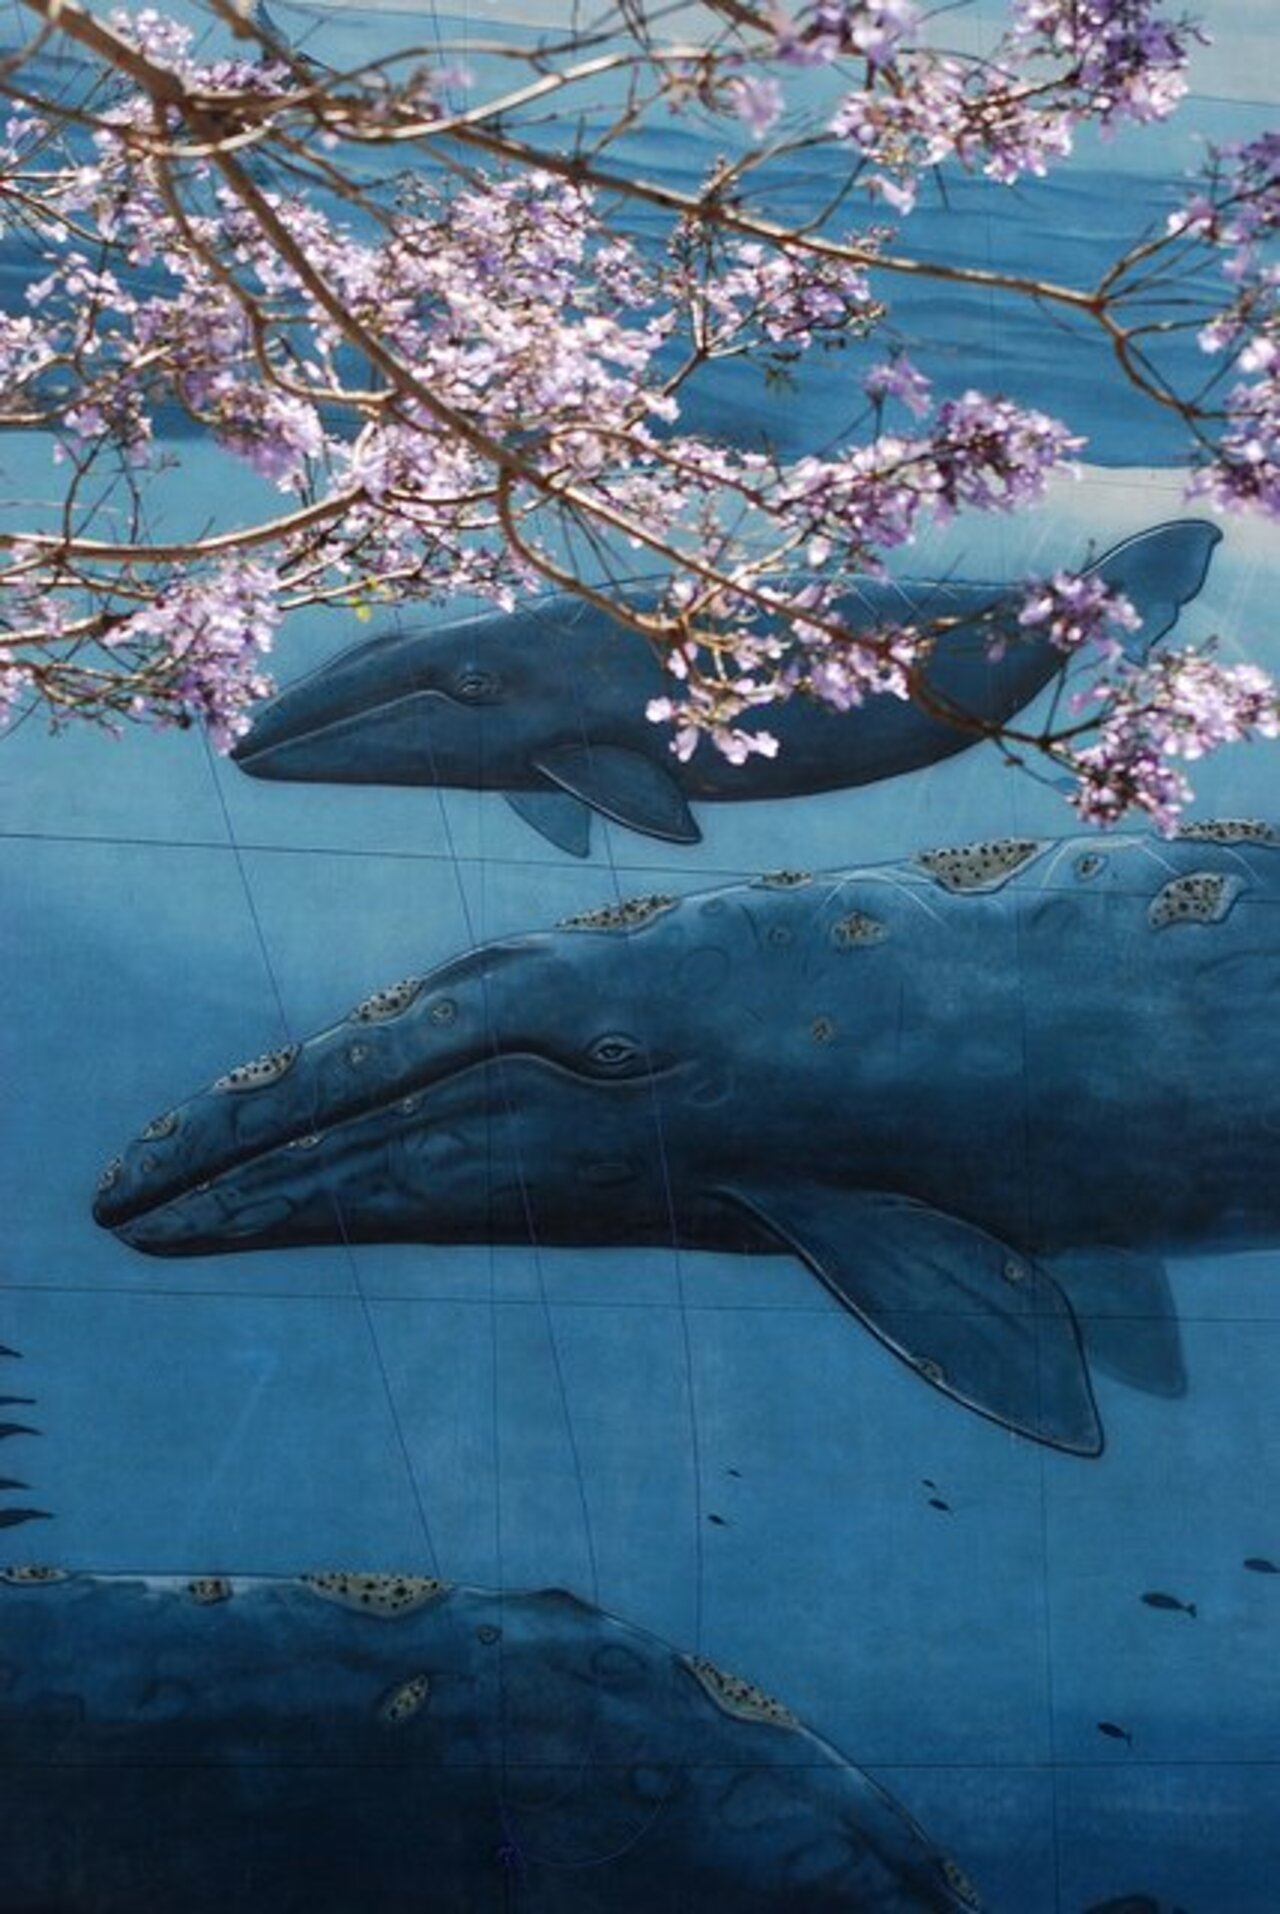 RT @5putnik1: Whales in Spring  •  #streetart #graffiti #art #sakura #funky #dope . : https://t.co/N1FGVfhDya